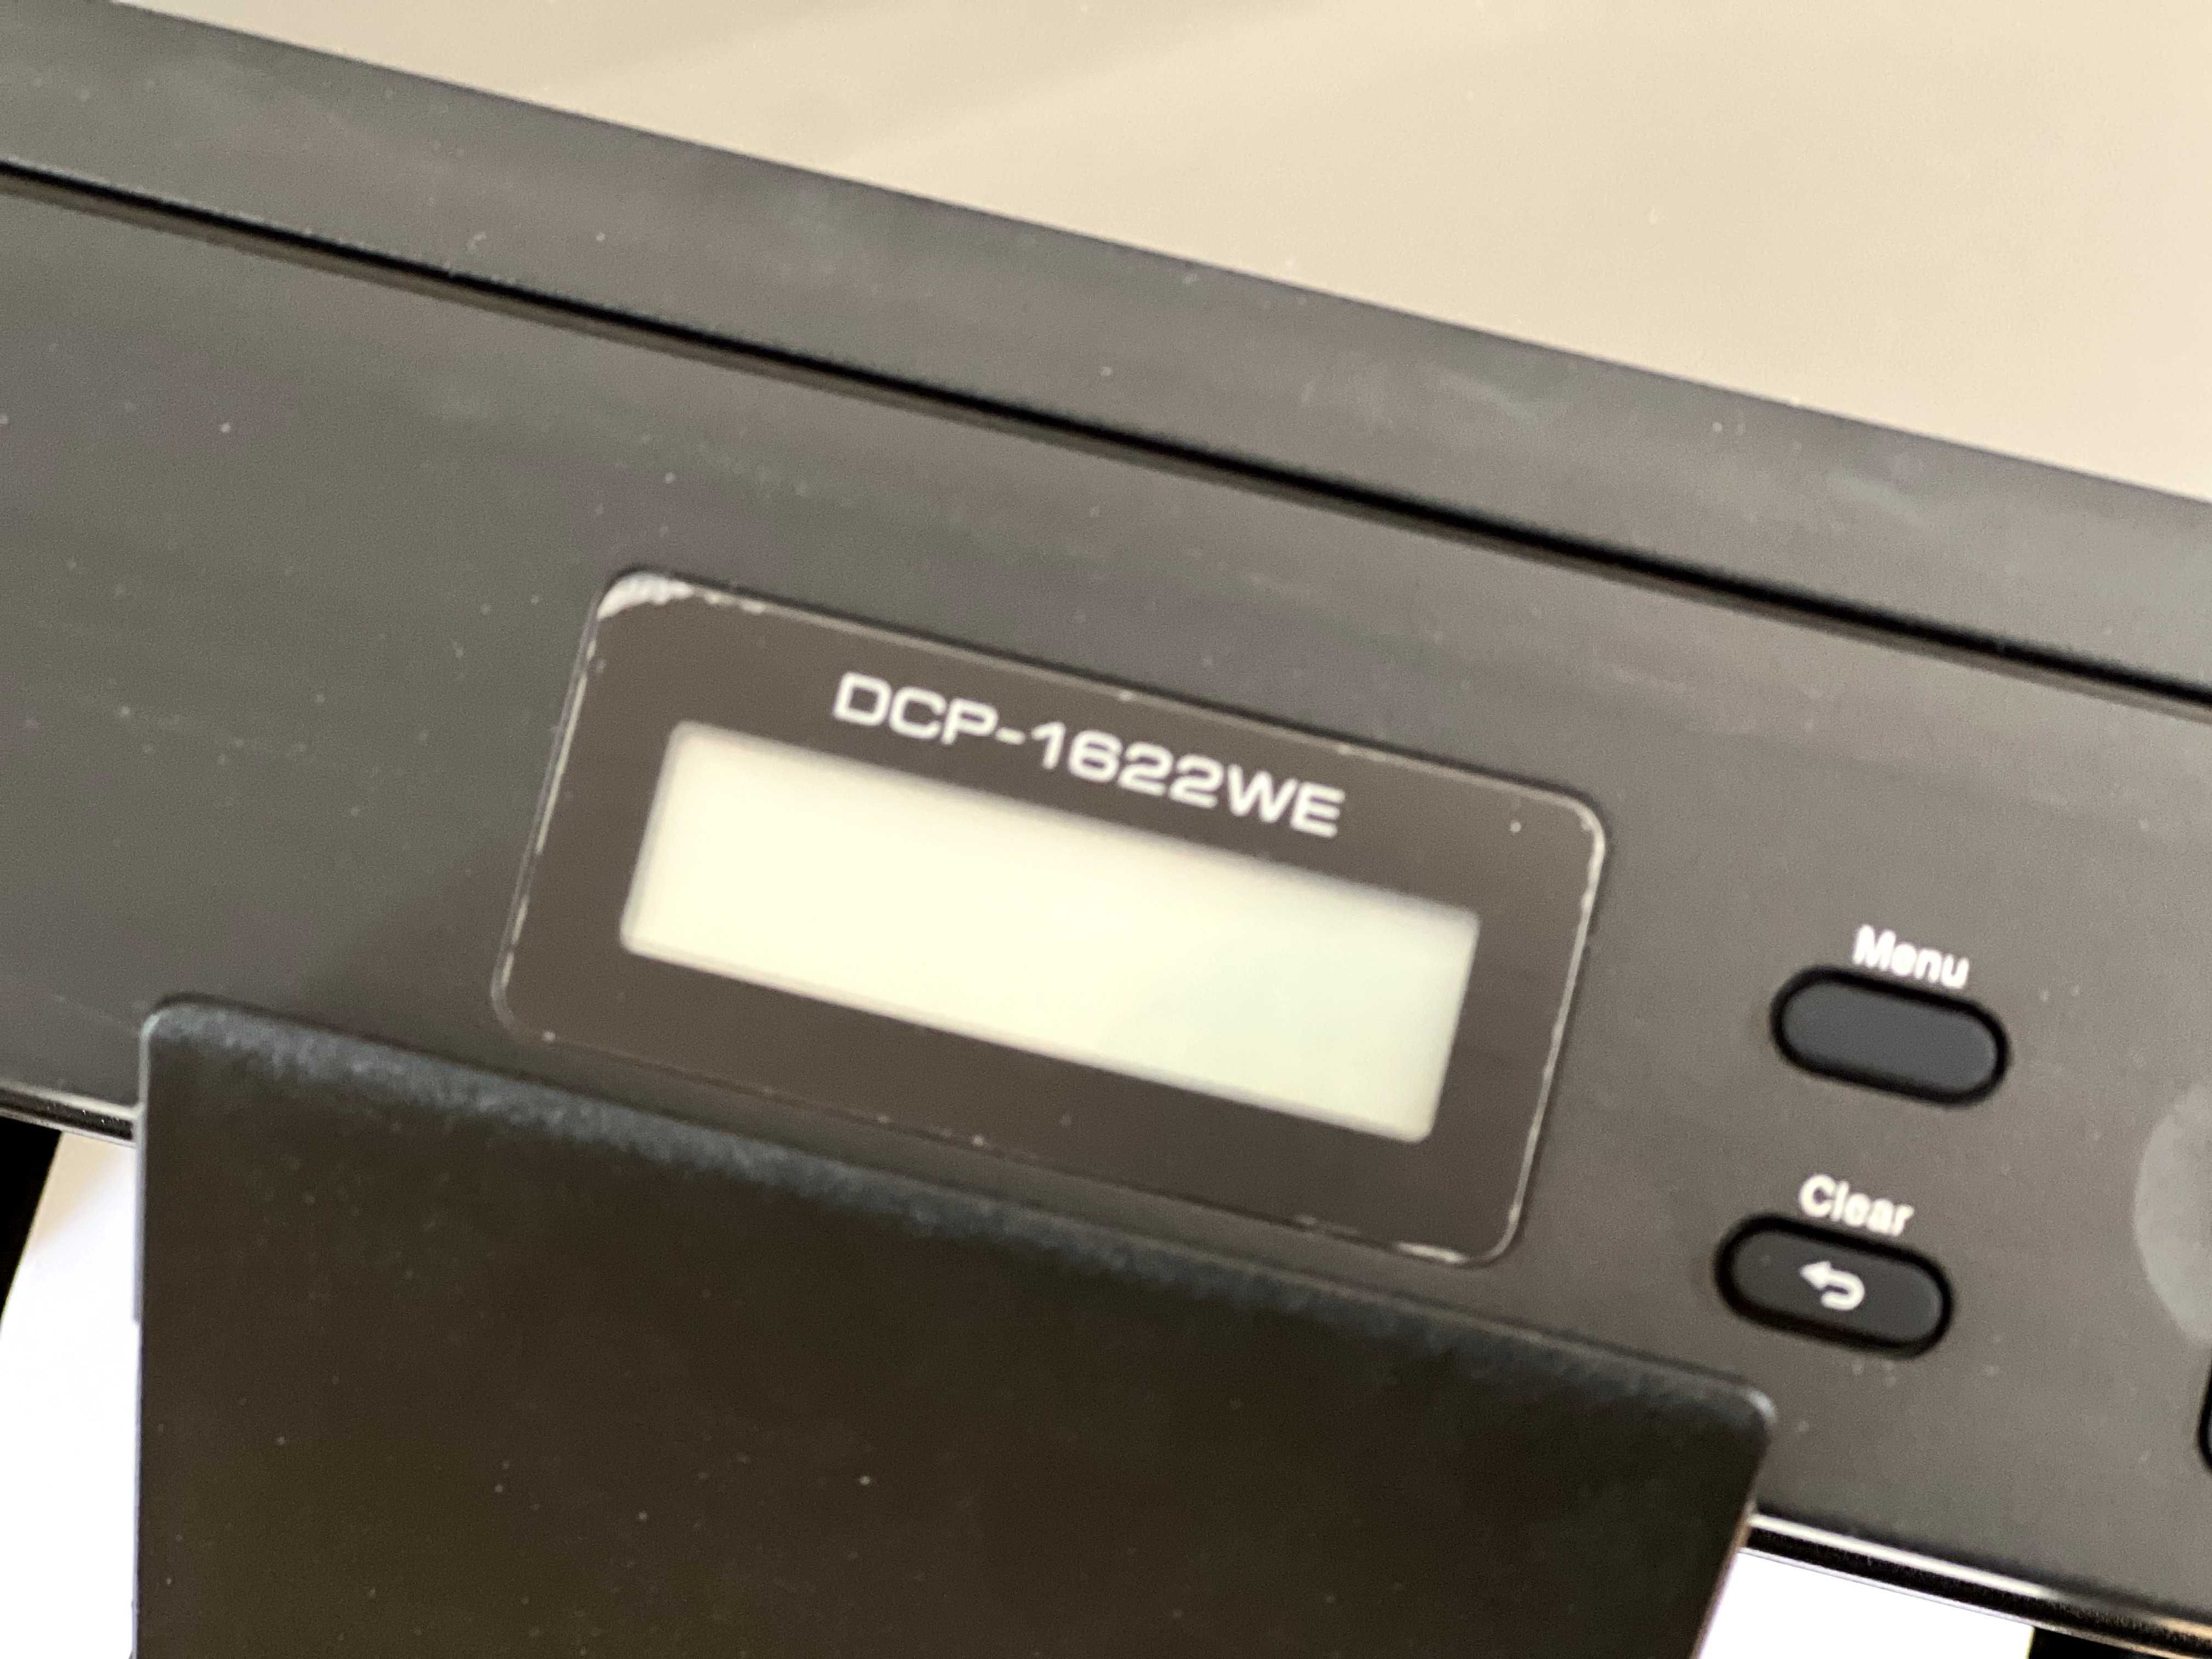 Imprimanta laser Brother DCP 1622WE